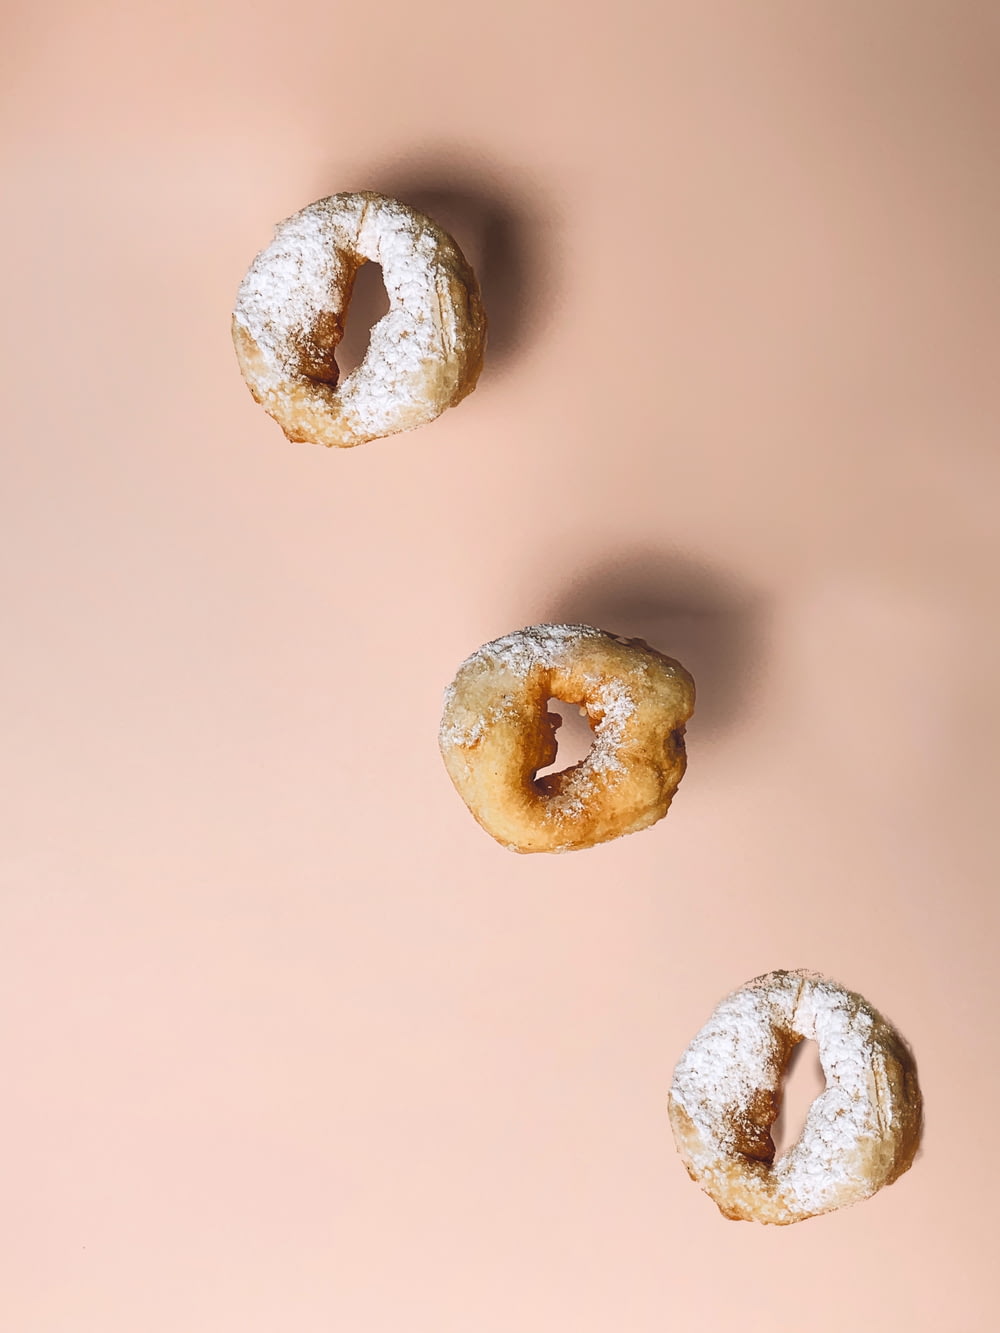 white doughnut on brown surface